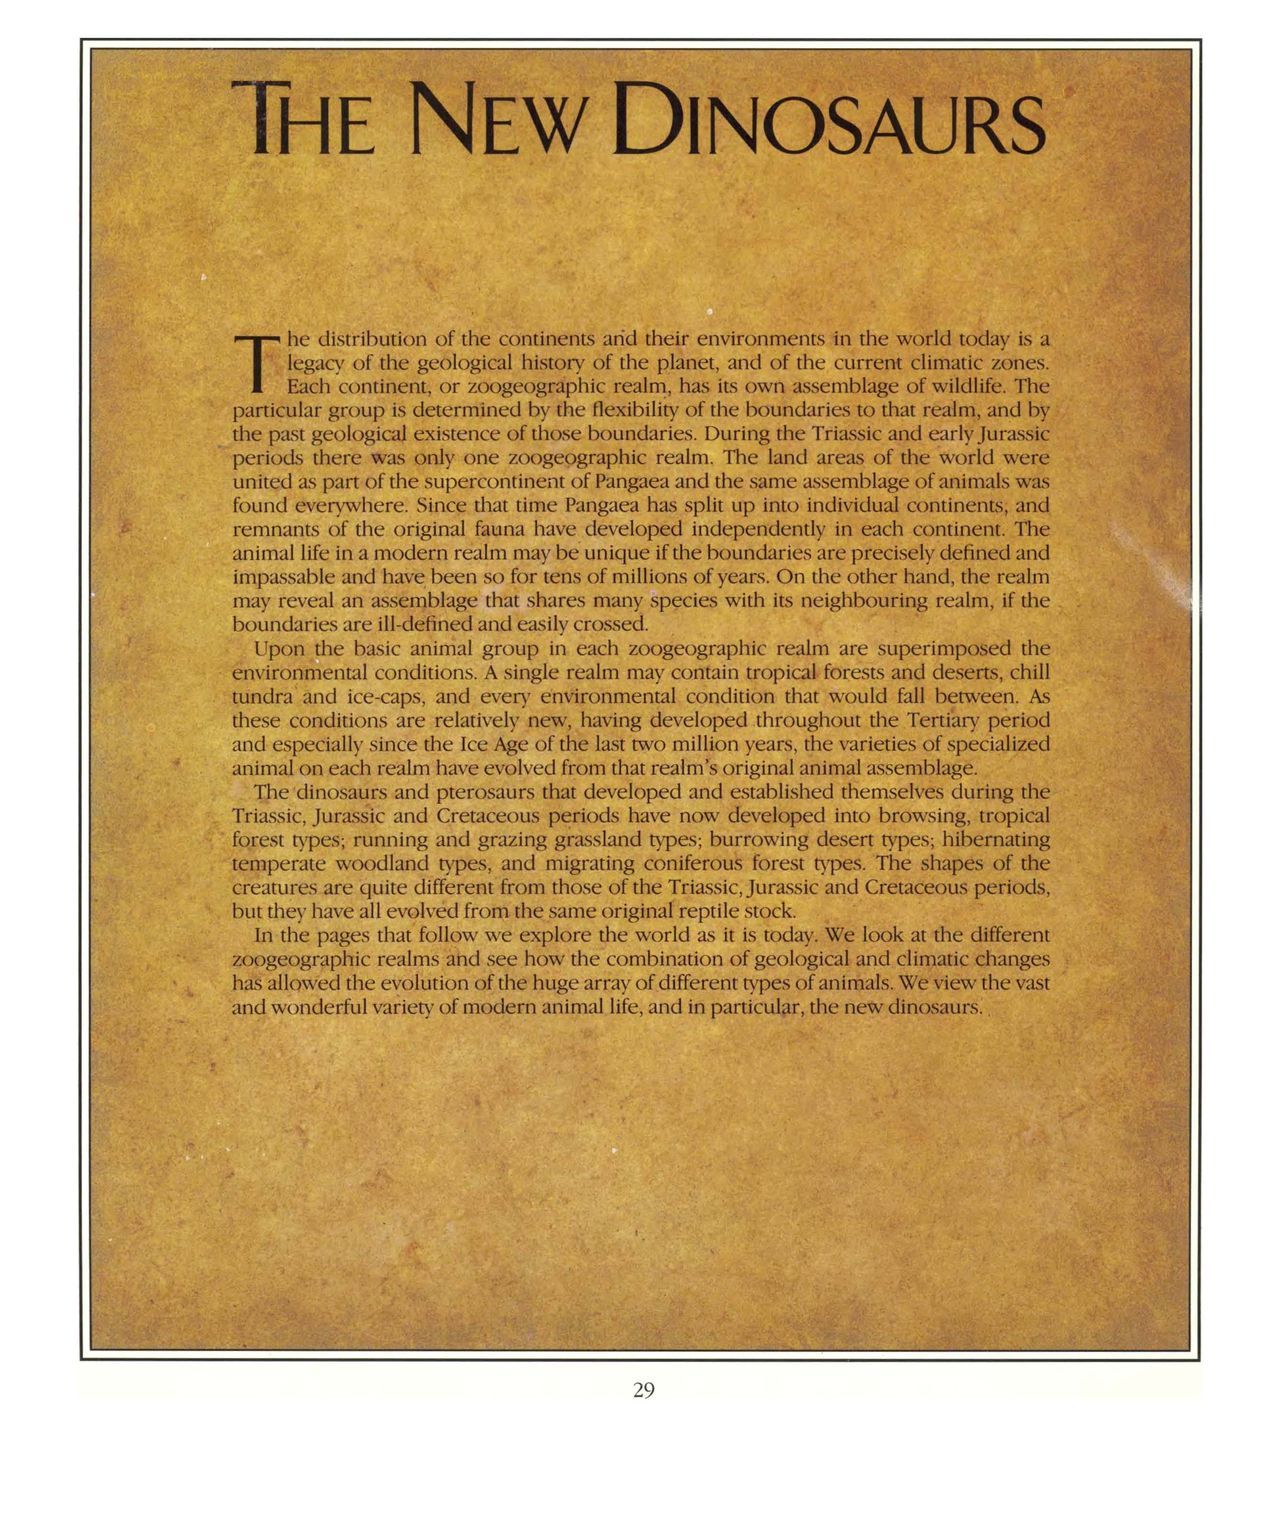 [Dougal Dixon] The New Dinosaurs: An Alternative Evolution 30